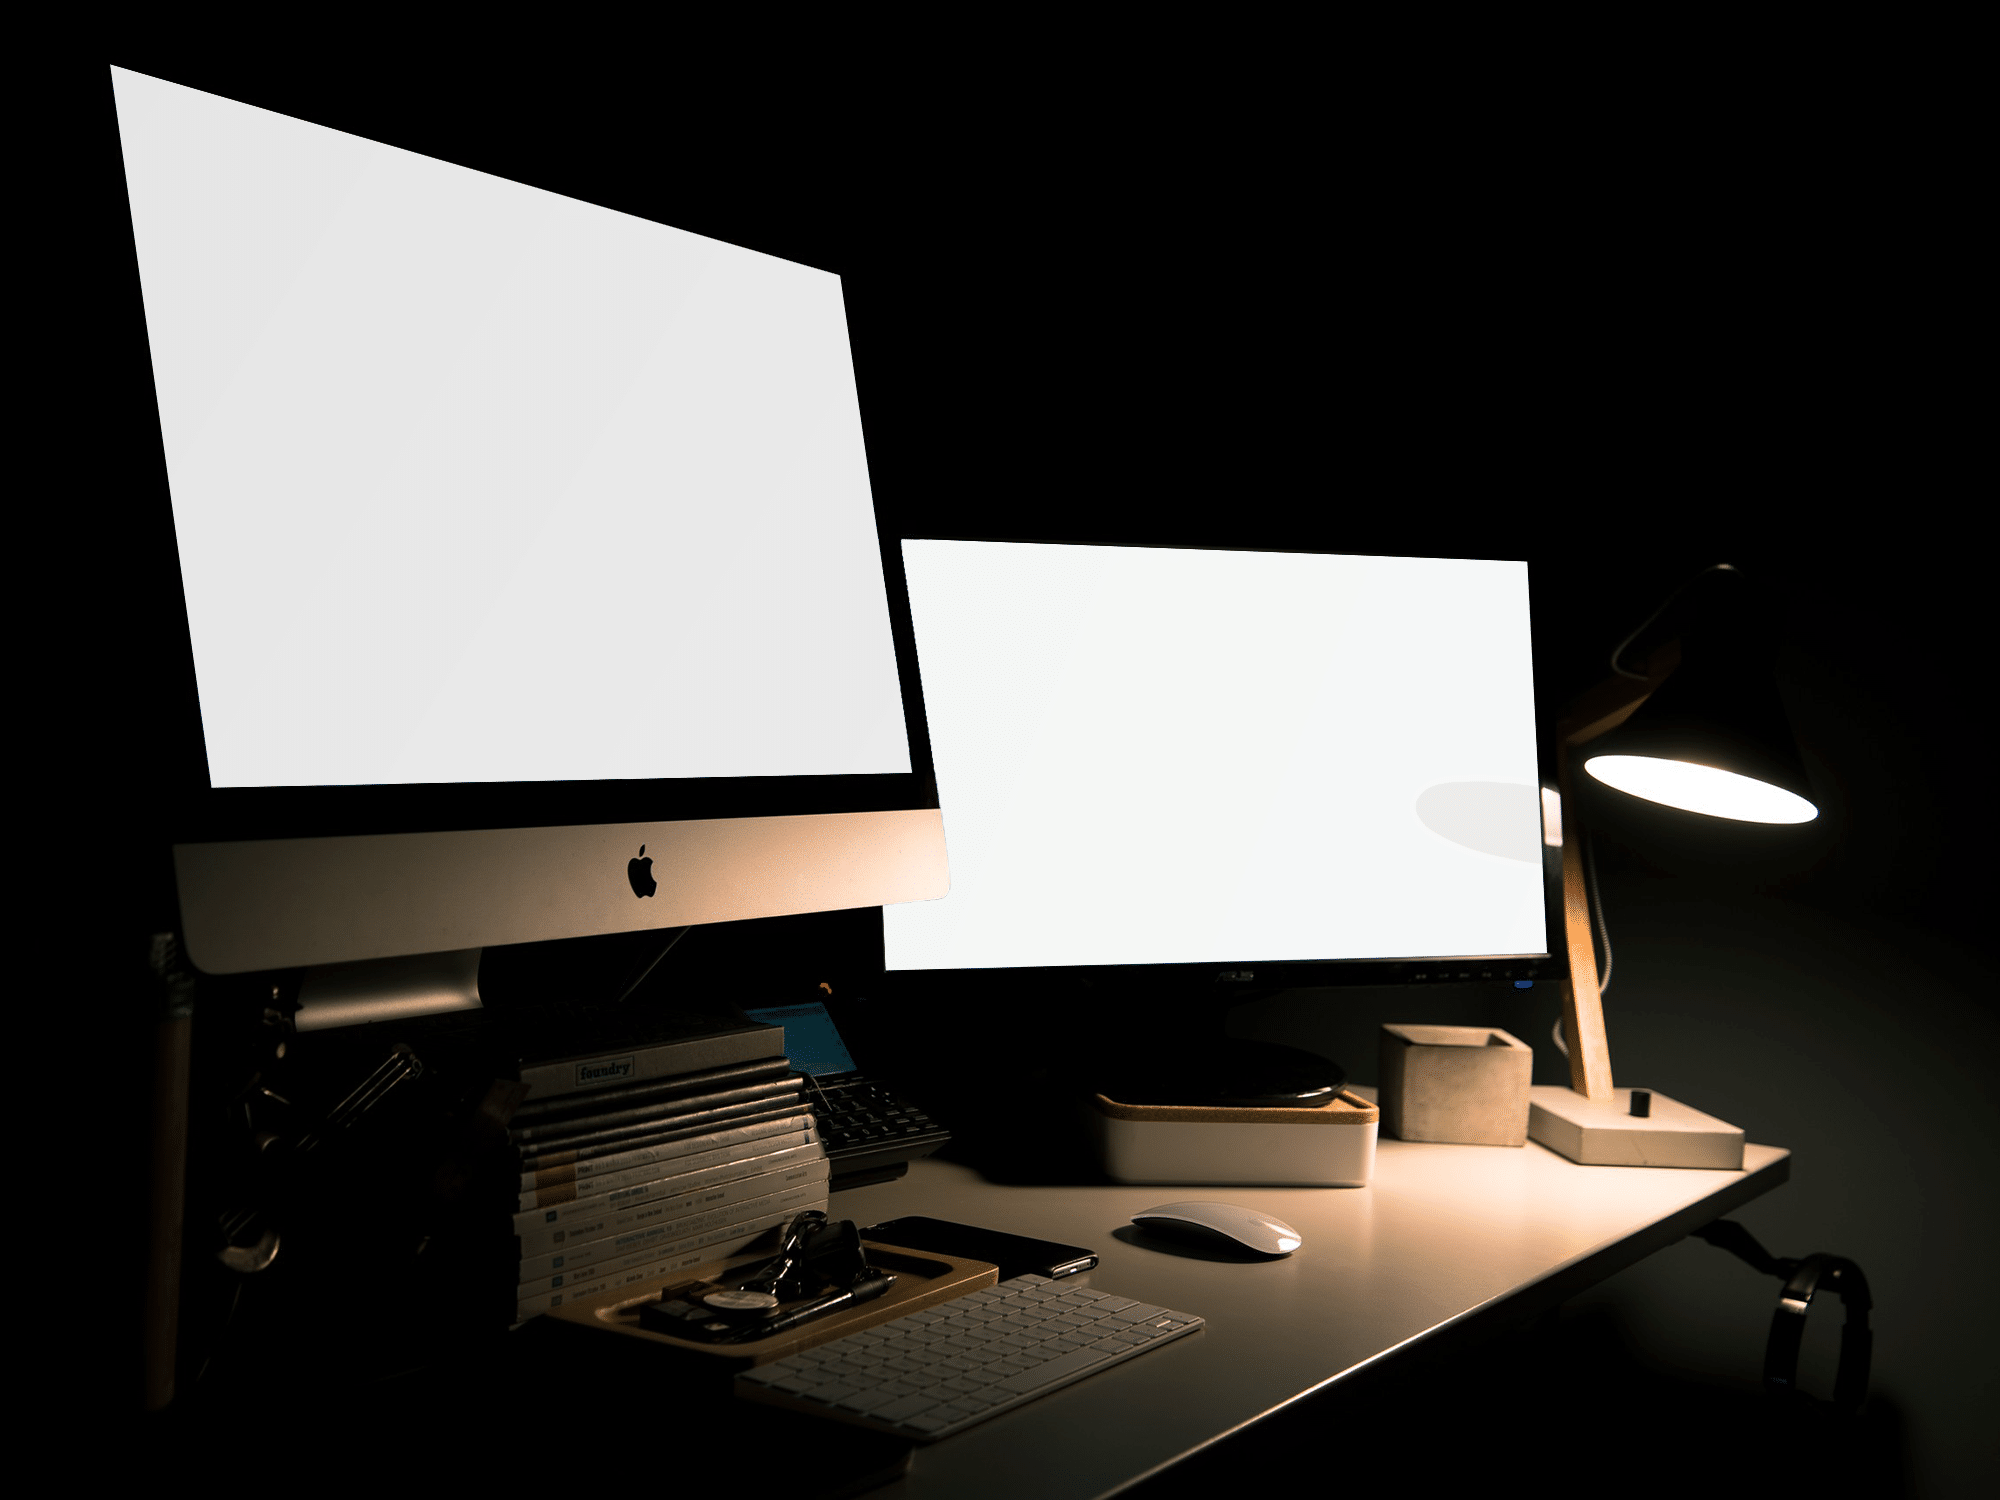 Download iMac Workspace at Night Mockup | The Mockup Club